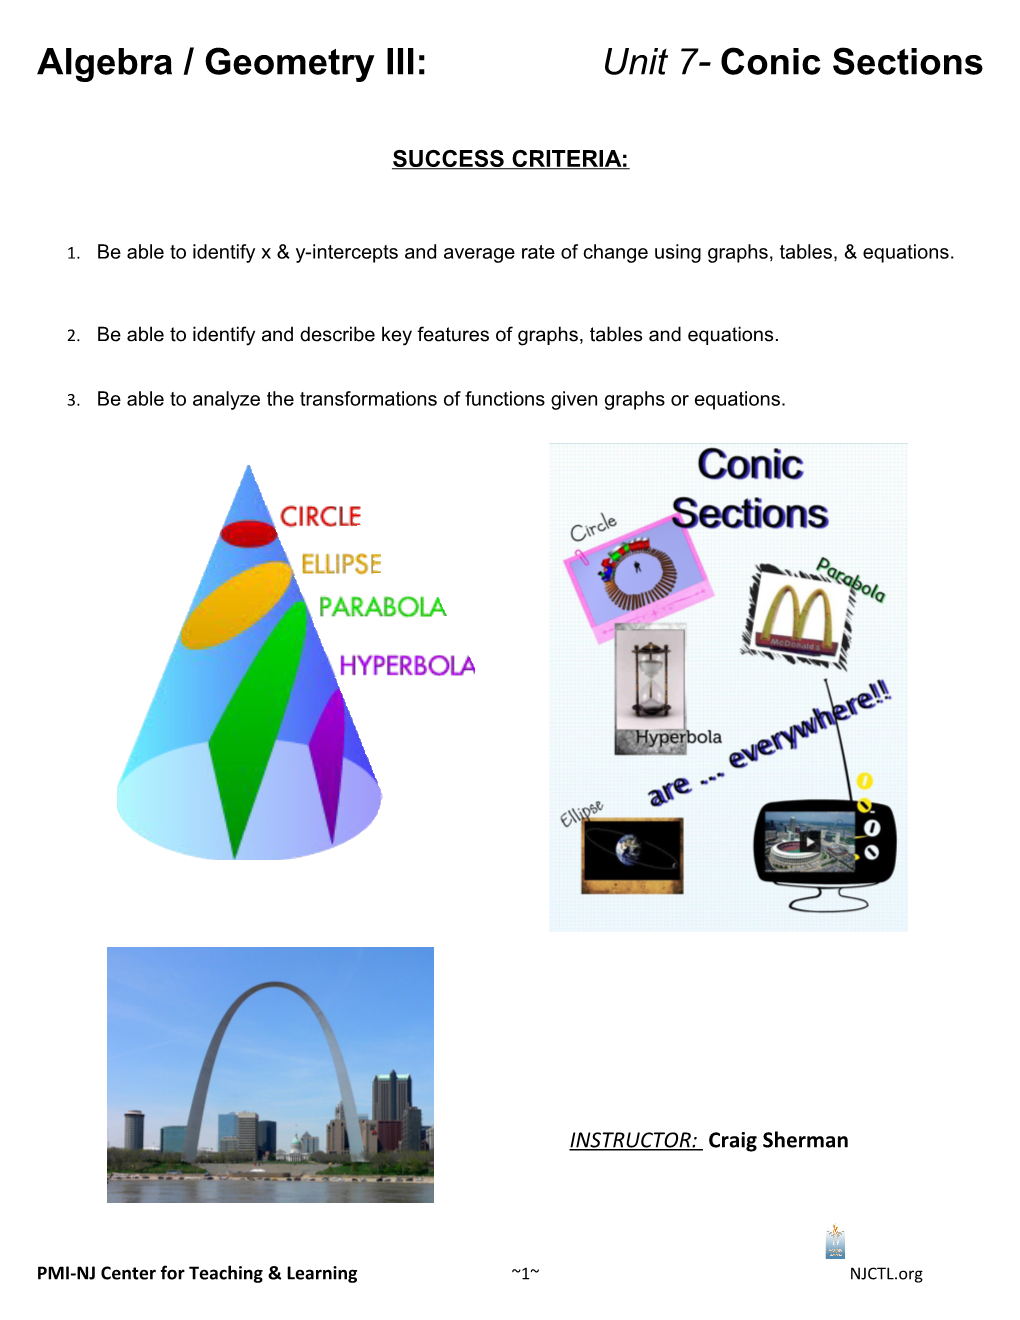 Algebra / Geometry III: Unit 7- Conic Sections